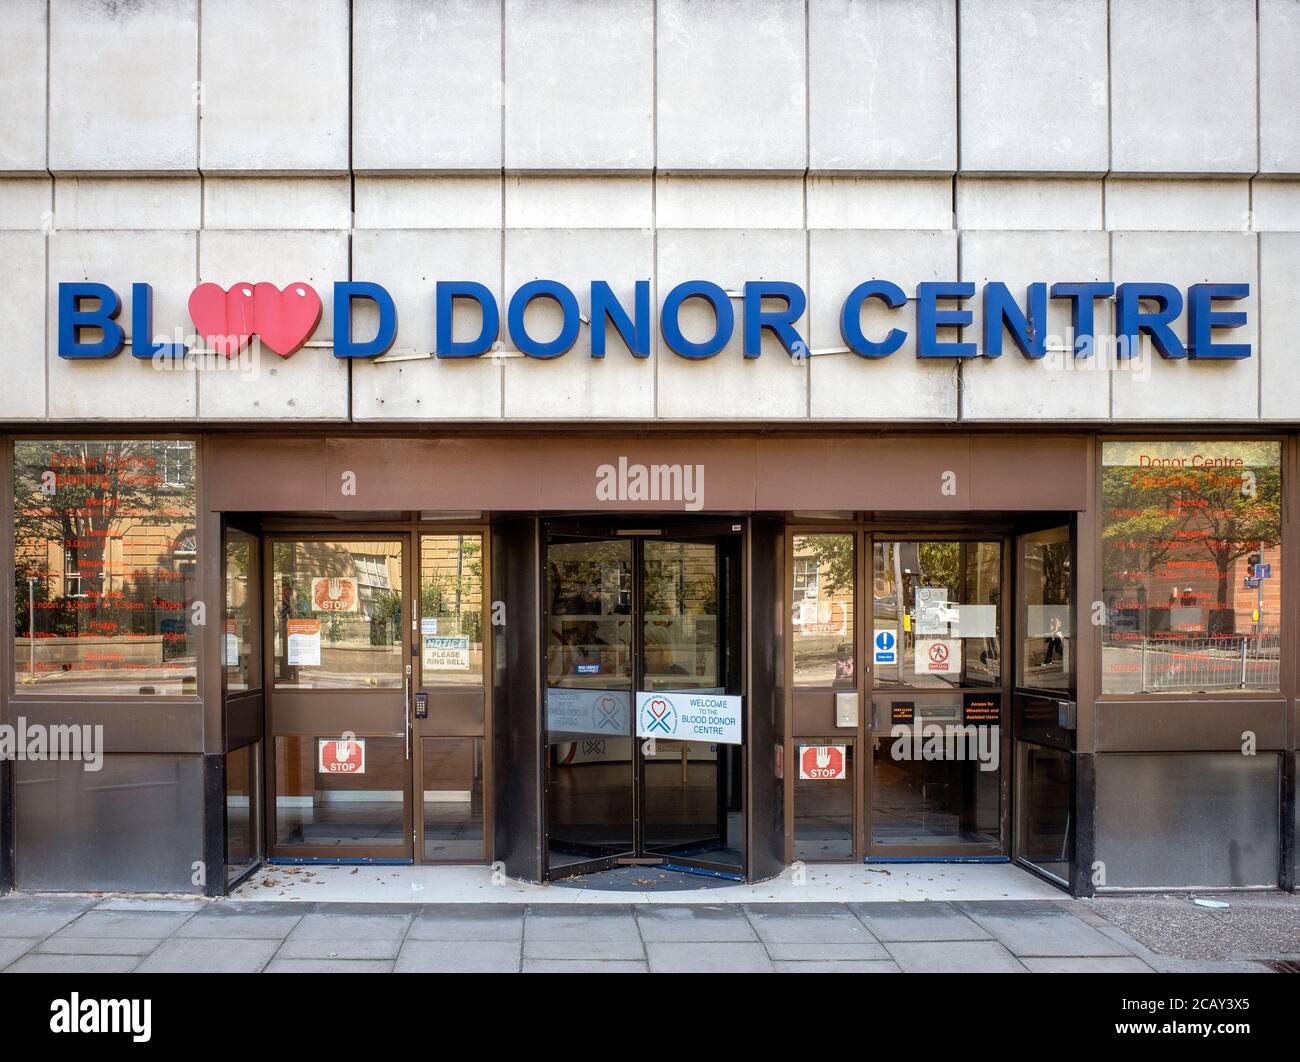 Edinburgh Blood Donor Centre, 41 Lauriston Place, Edinburgh EH3 9HB, Scotland, UK. Stock Photo